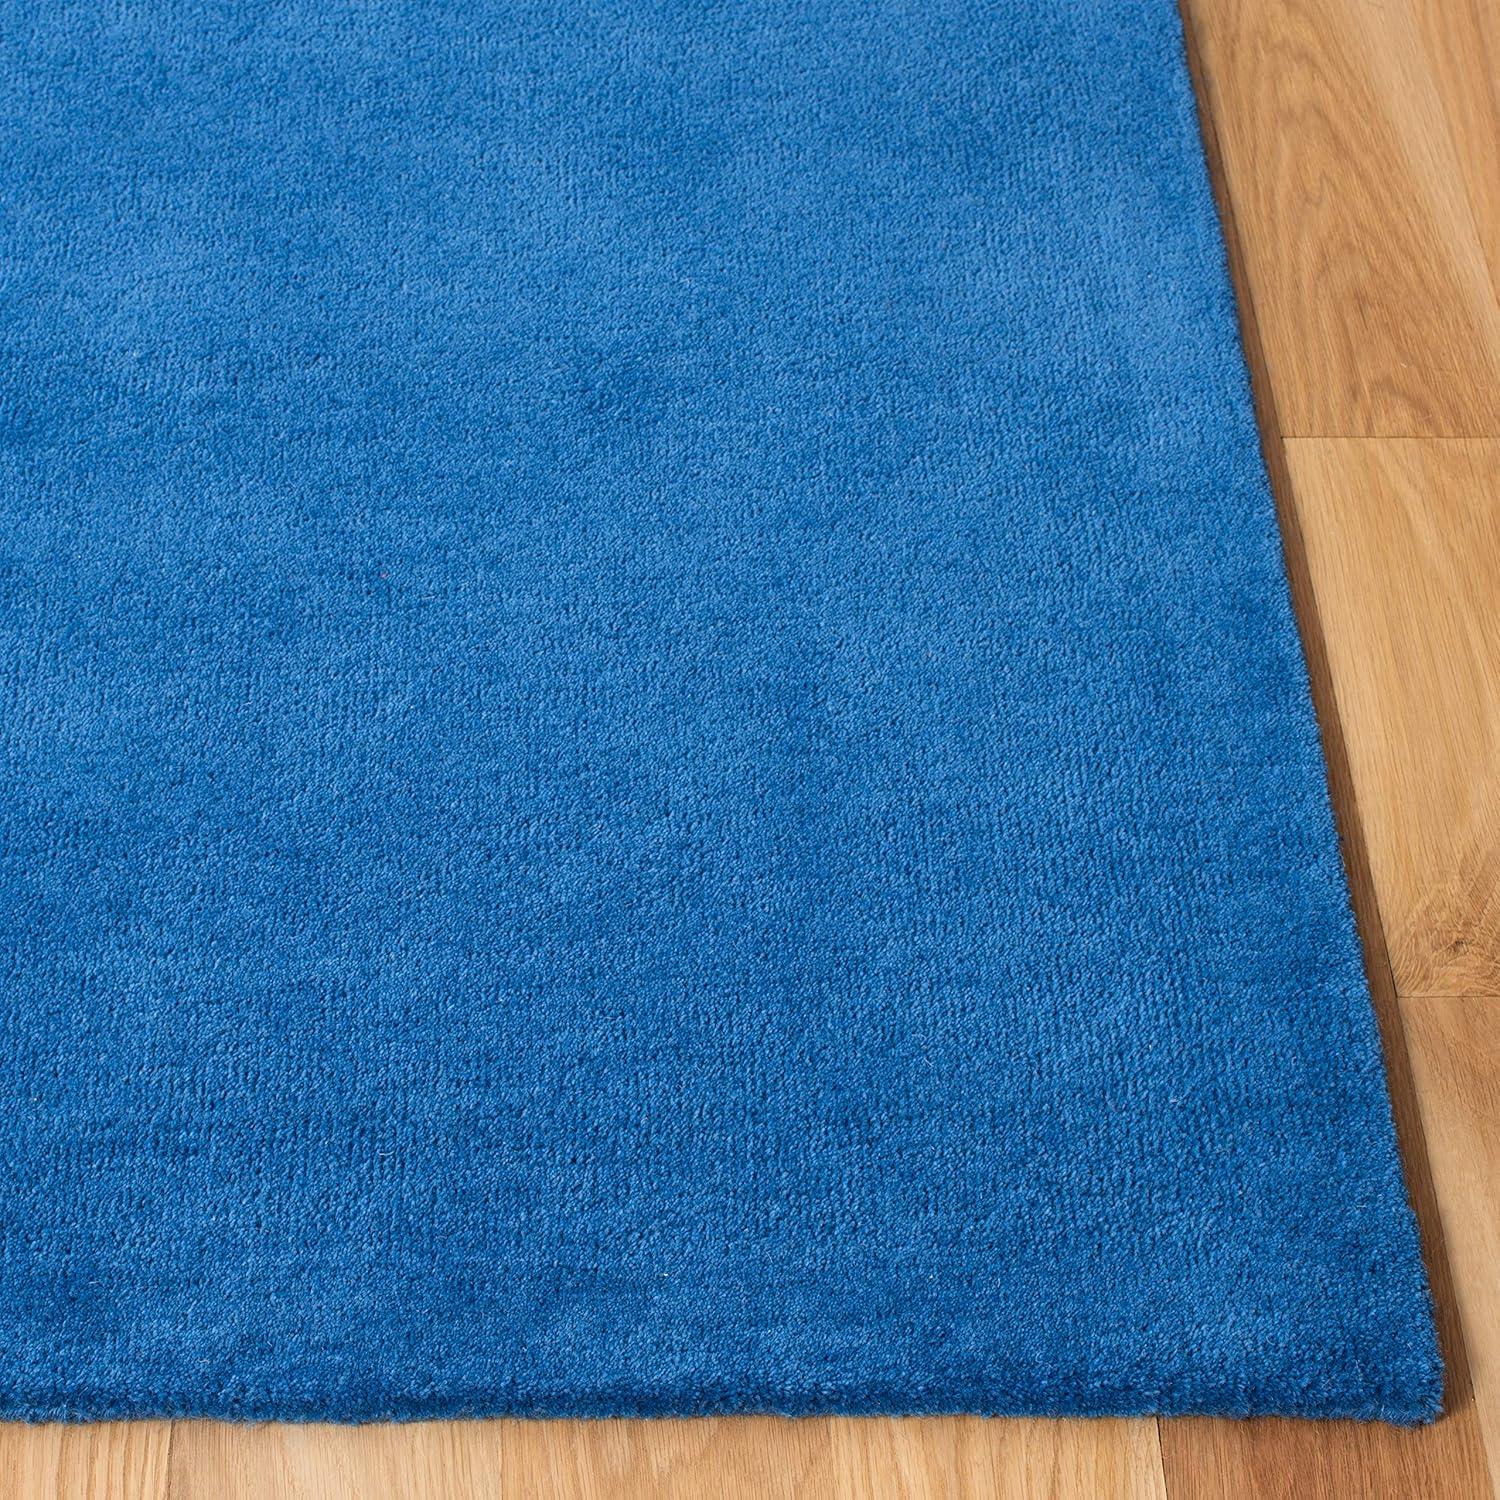 Handmade Mid-Century Modern Abstract Blue Wool Runner Rug - 2'3" x 10'